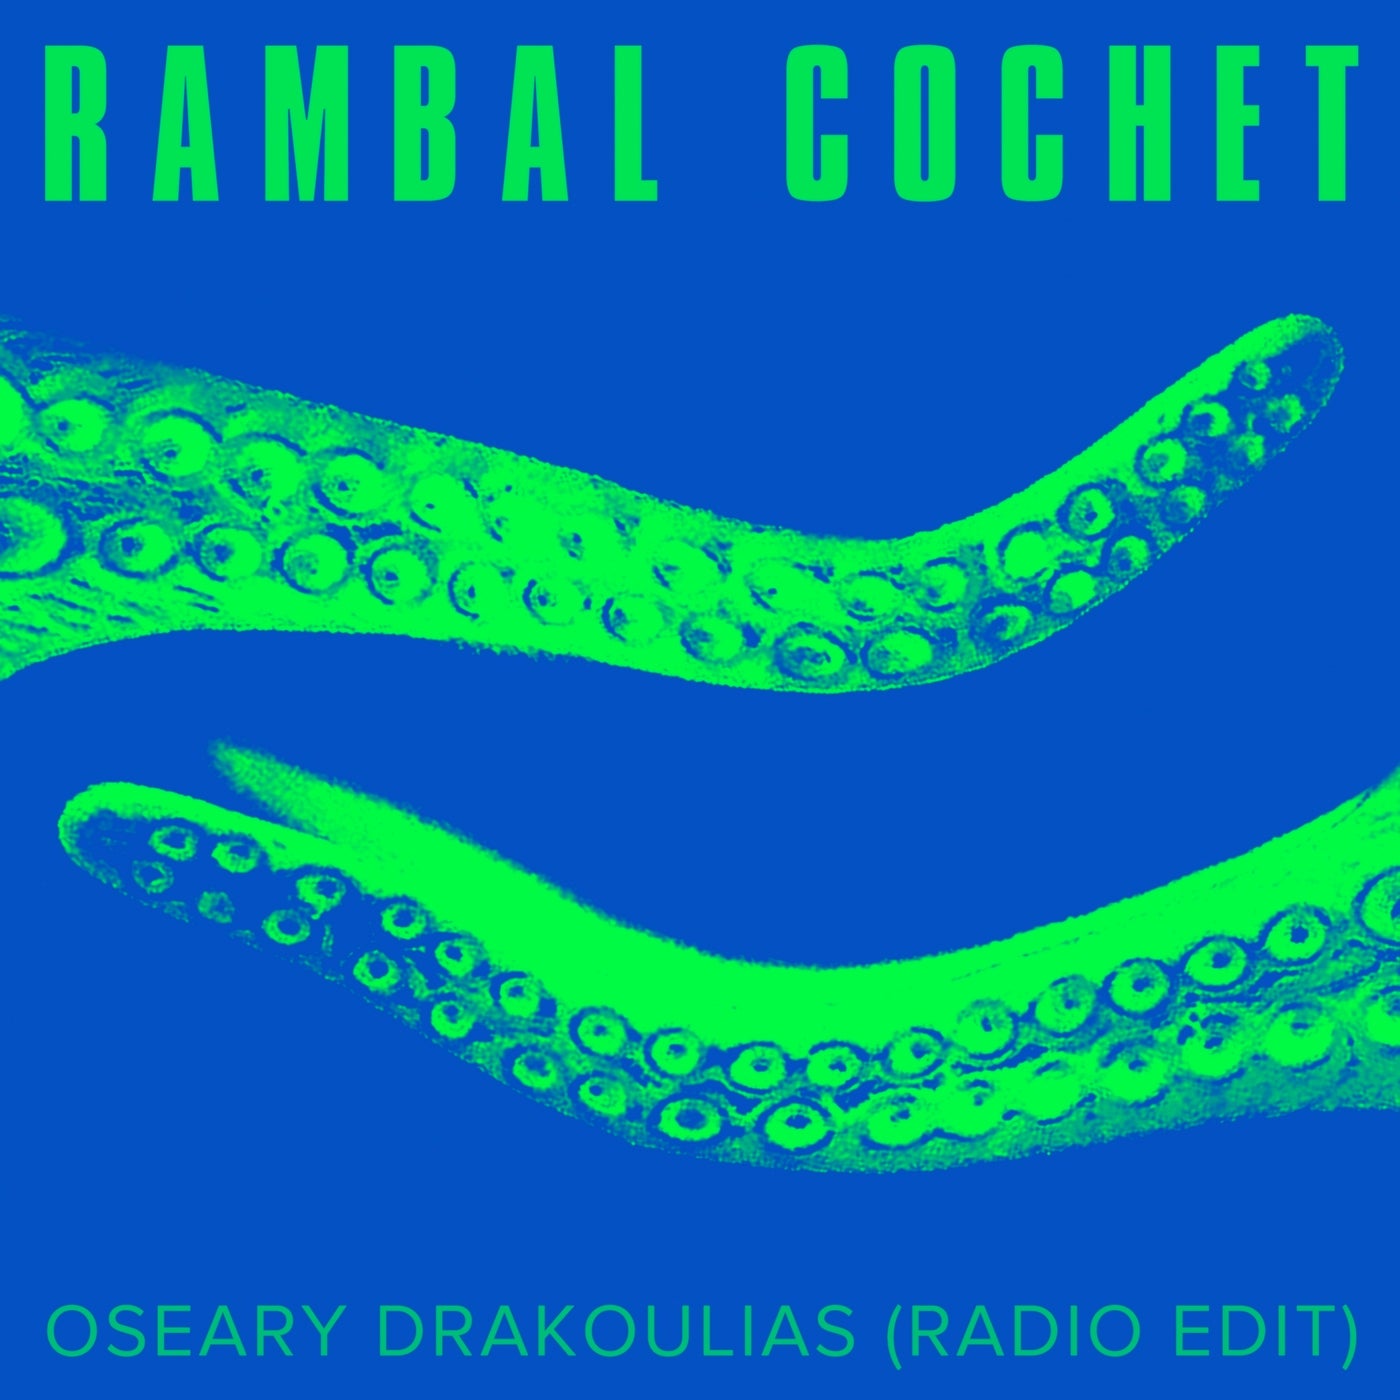 Oseary Drakoulias (Radio Edit)